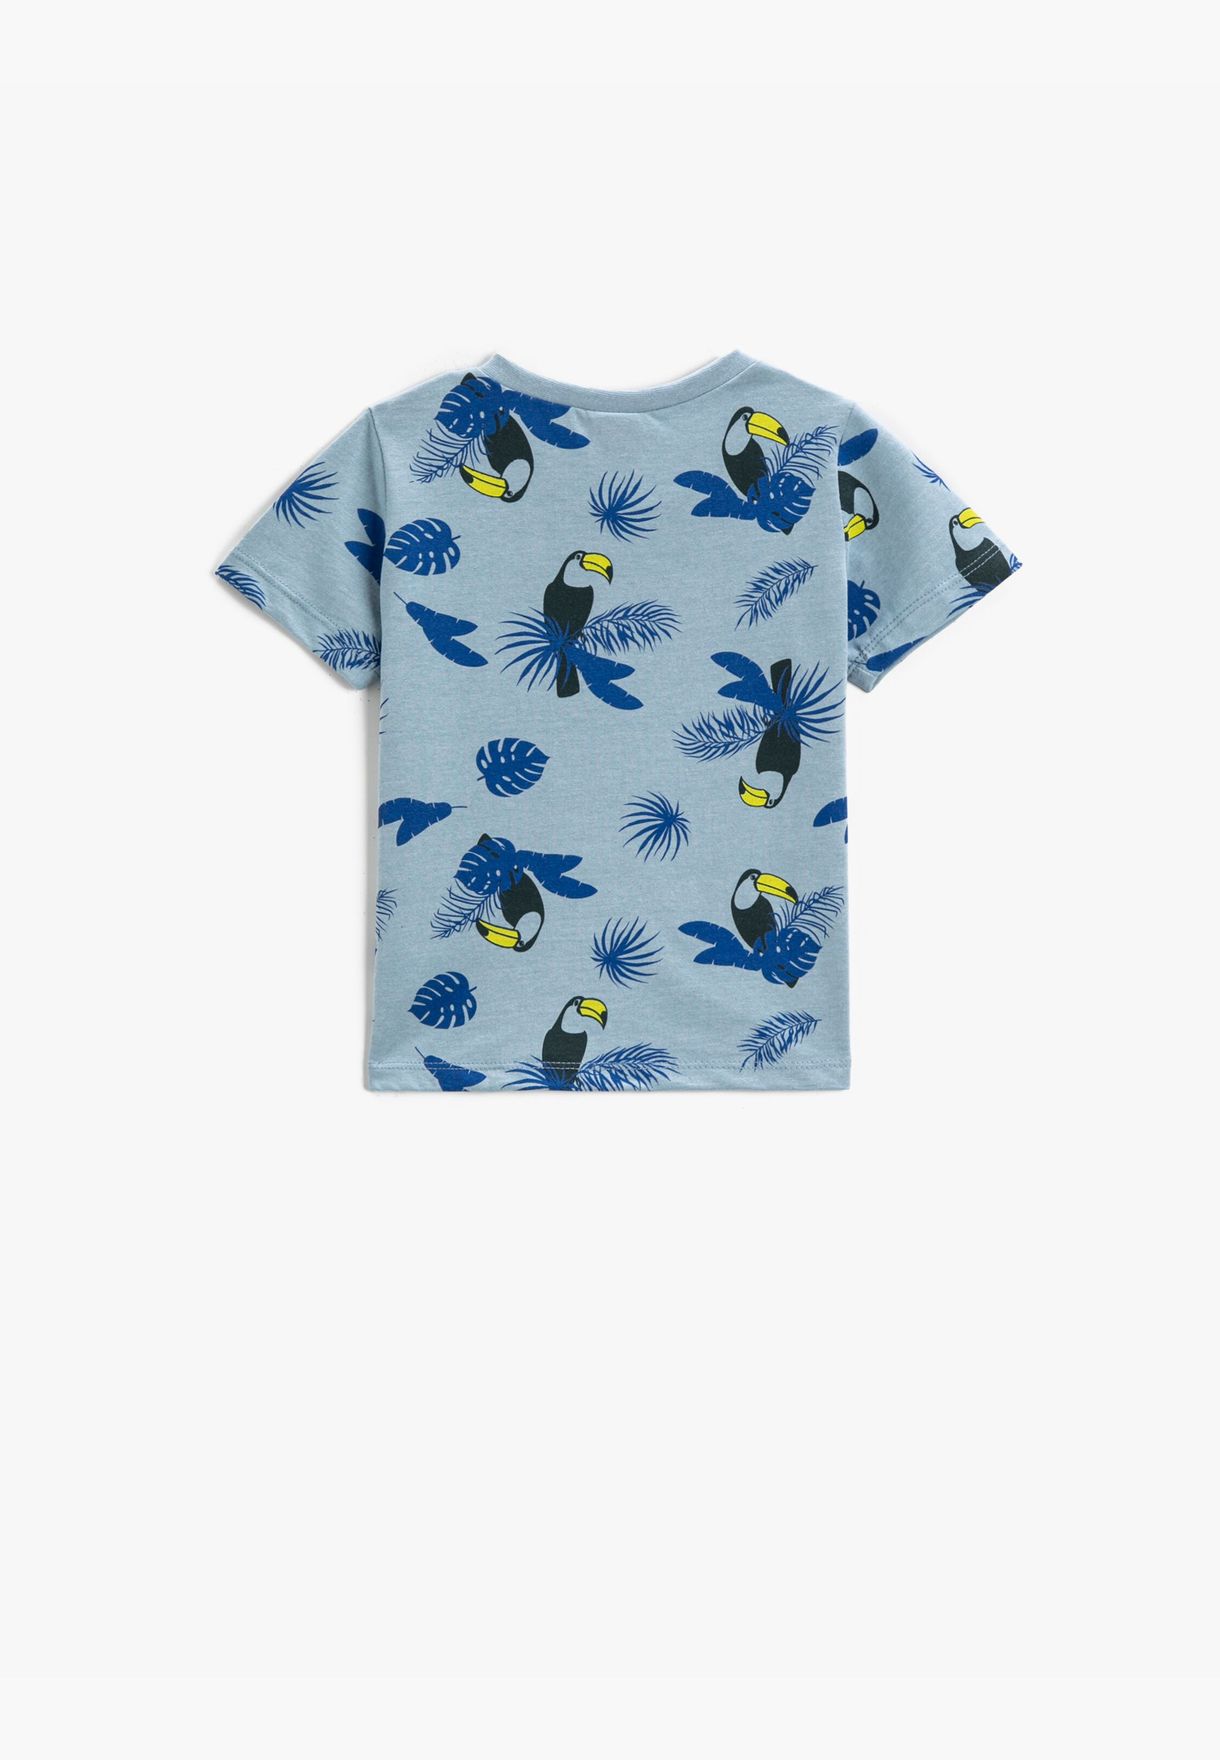 Parrot Printed Short Sleeve T-Shirt  Crew Neck